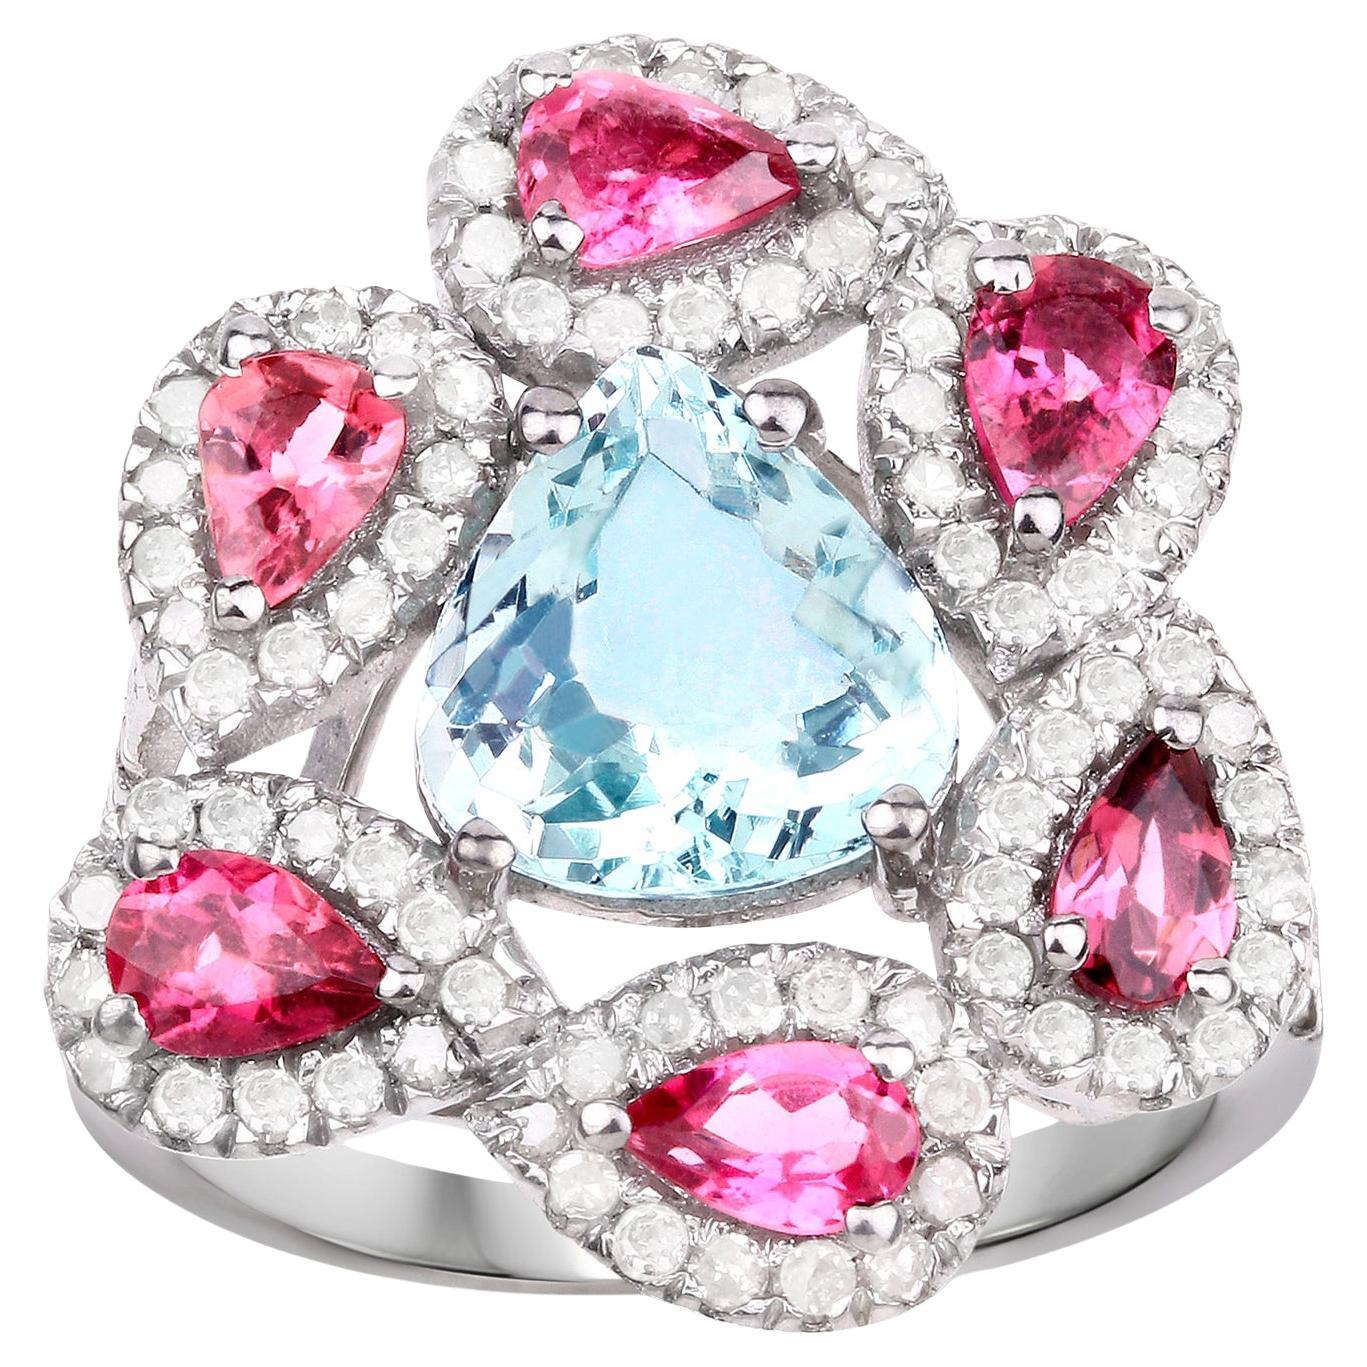 Aquamarine Ring With Pink Tourmalines and Diamonds 4.66 Carats